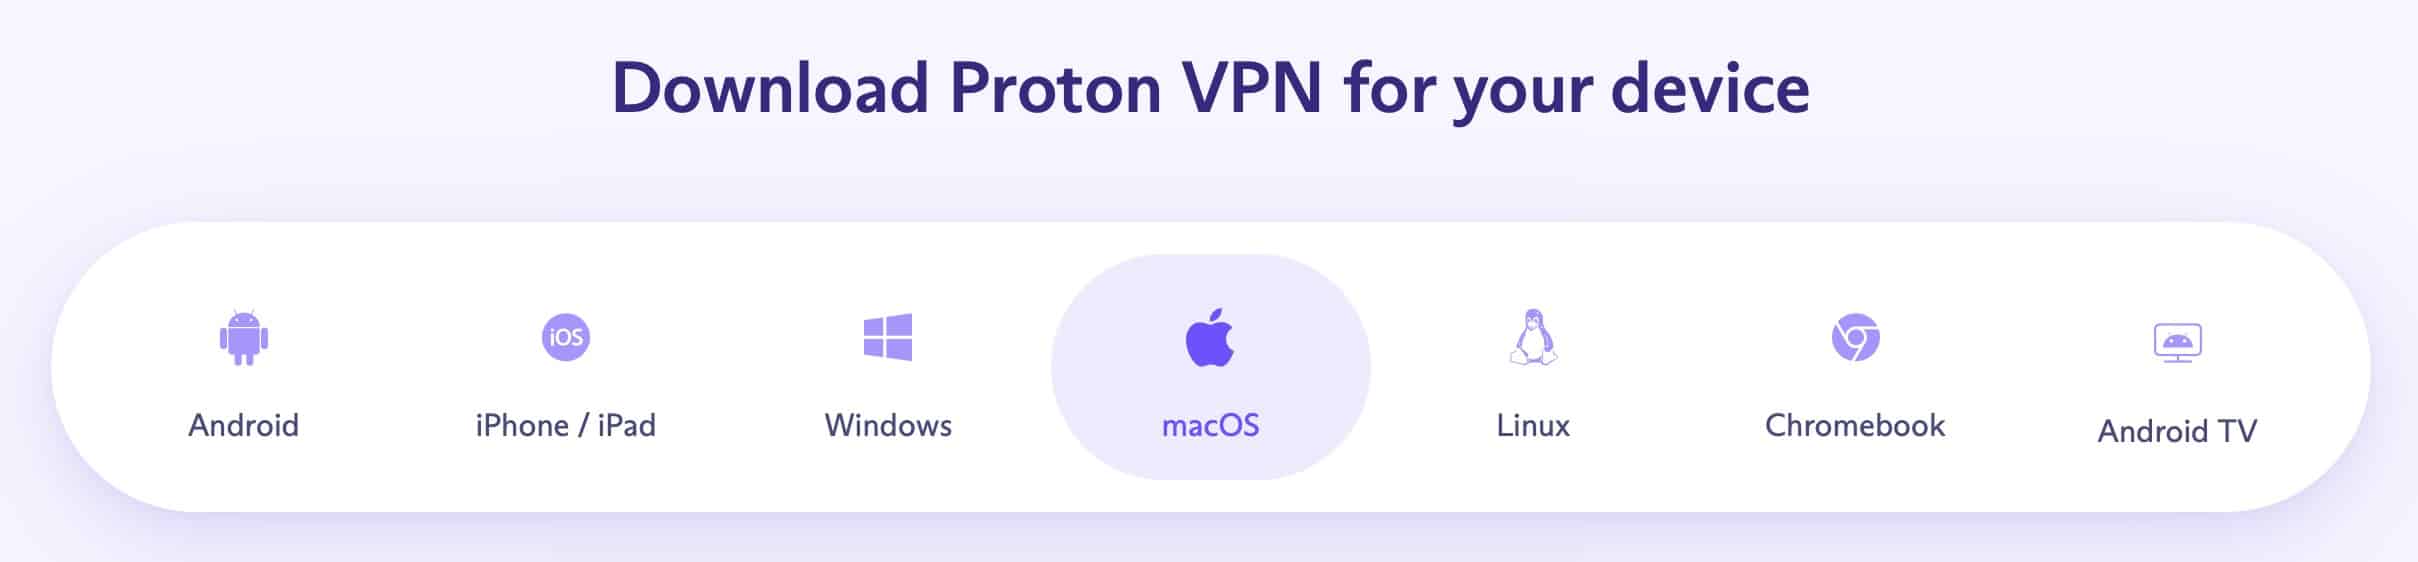 ProtonVPN - Platforms